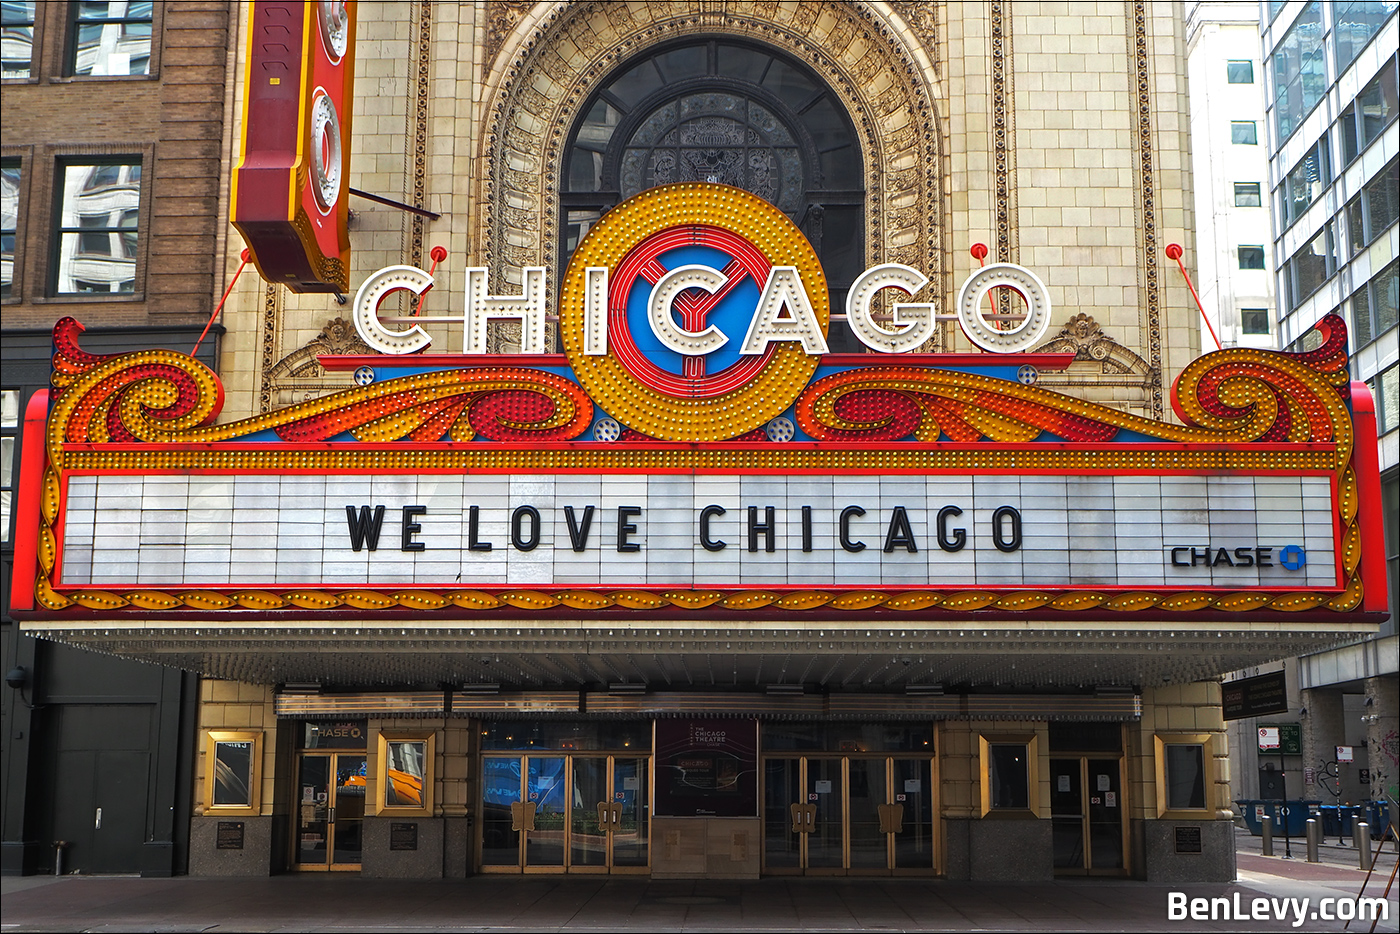 We Love Chicago